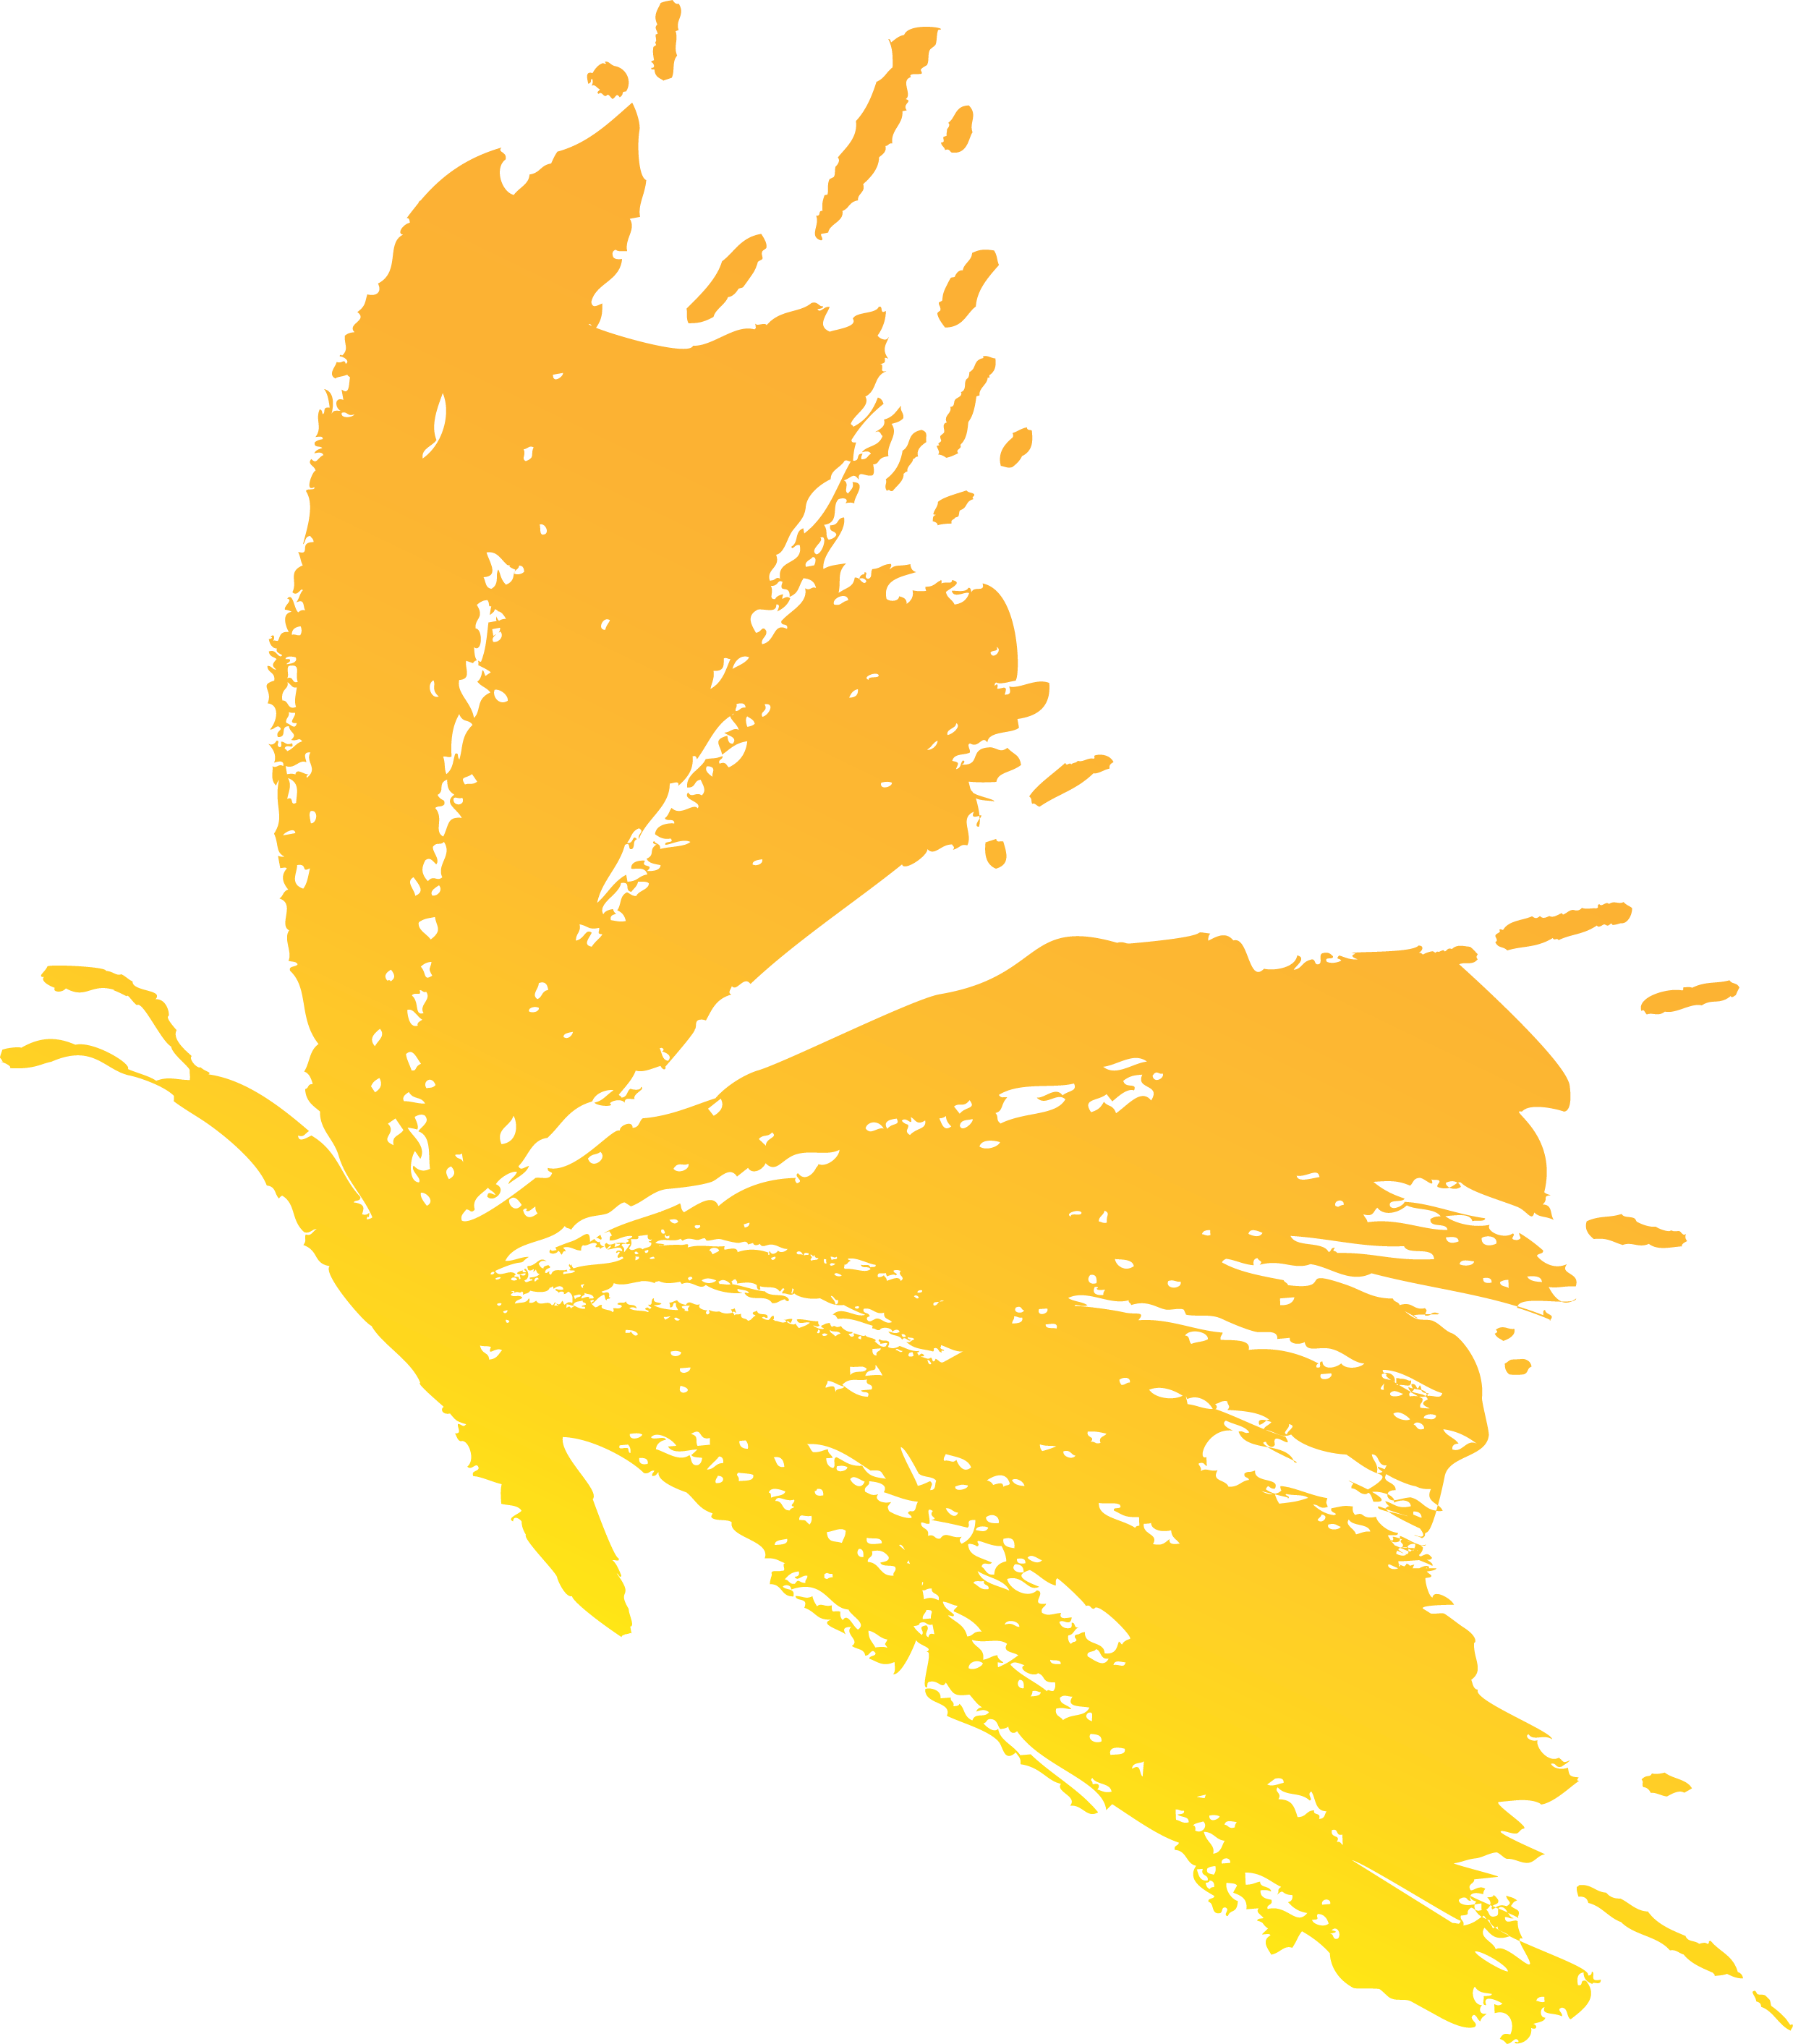 HopeSparks butterfly logo